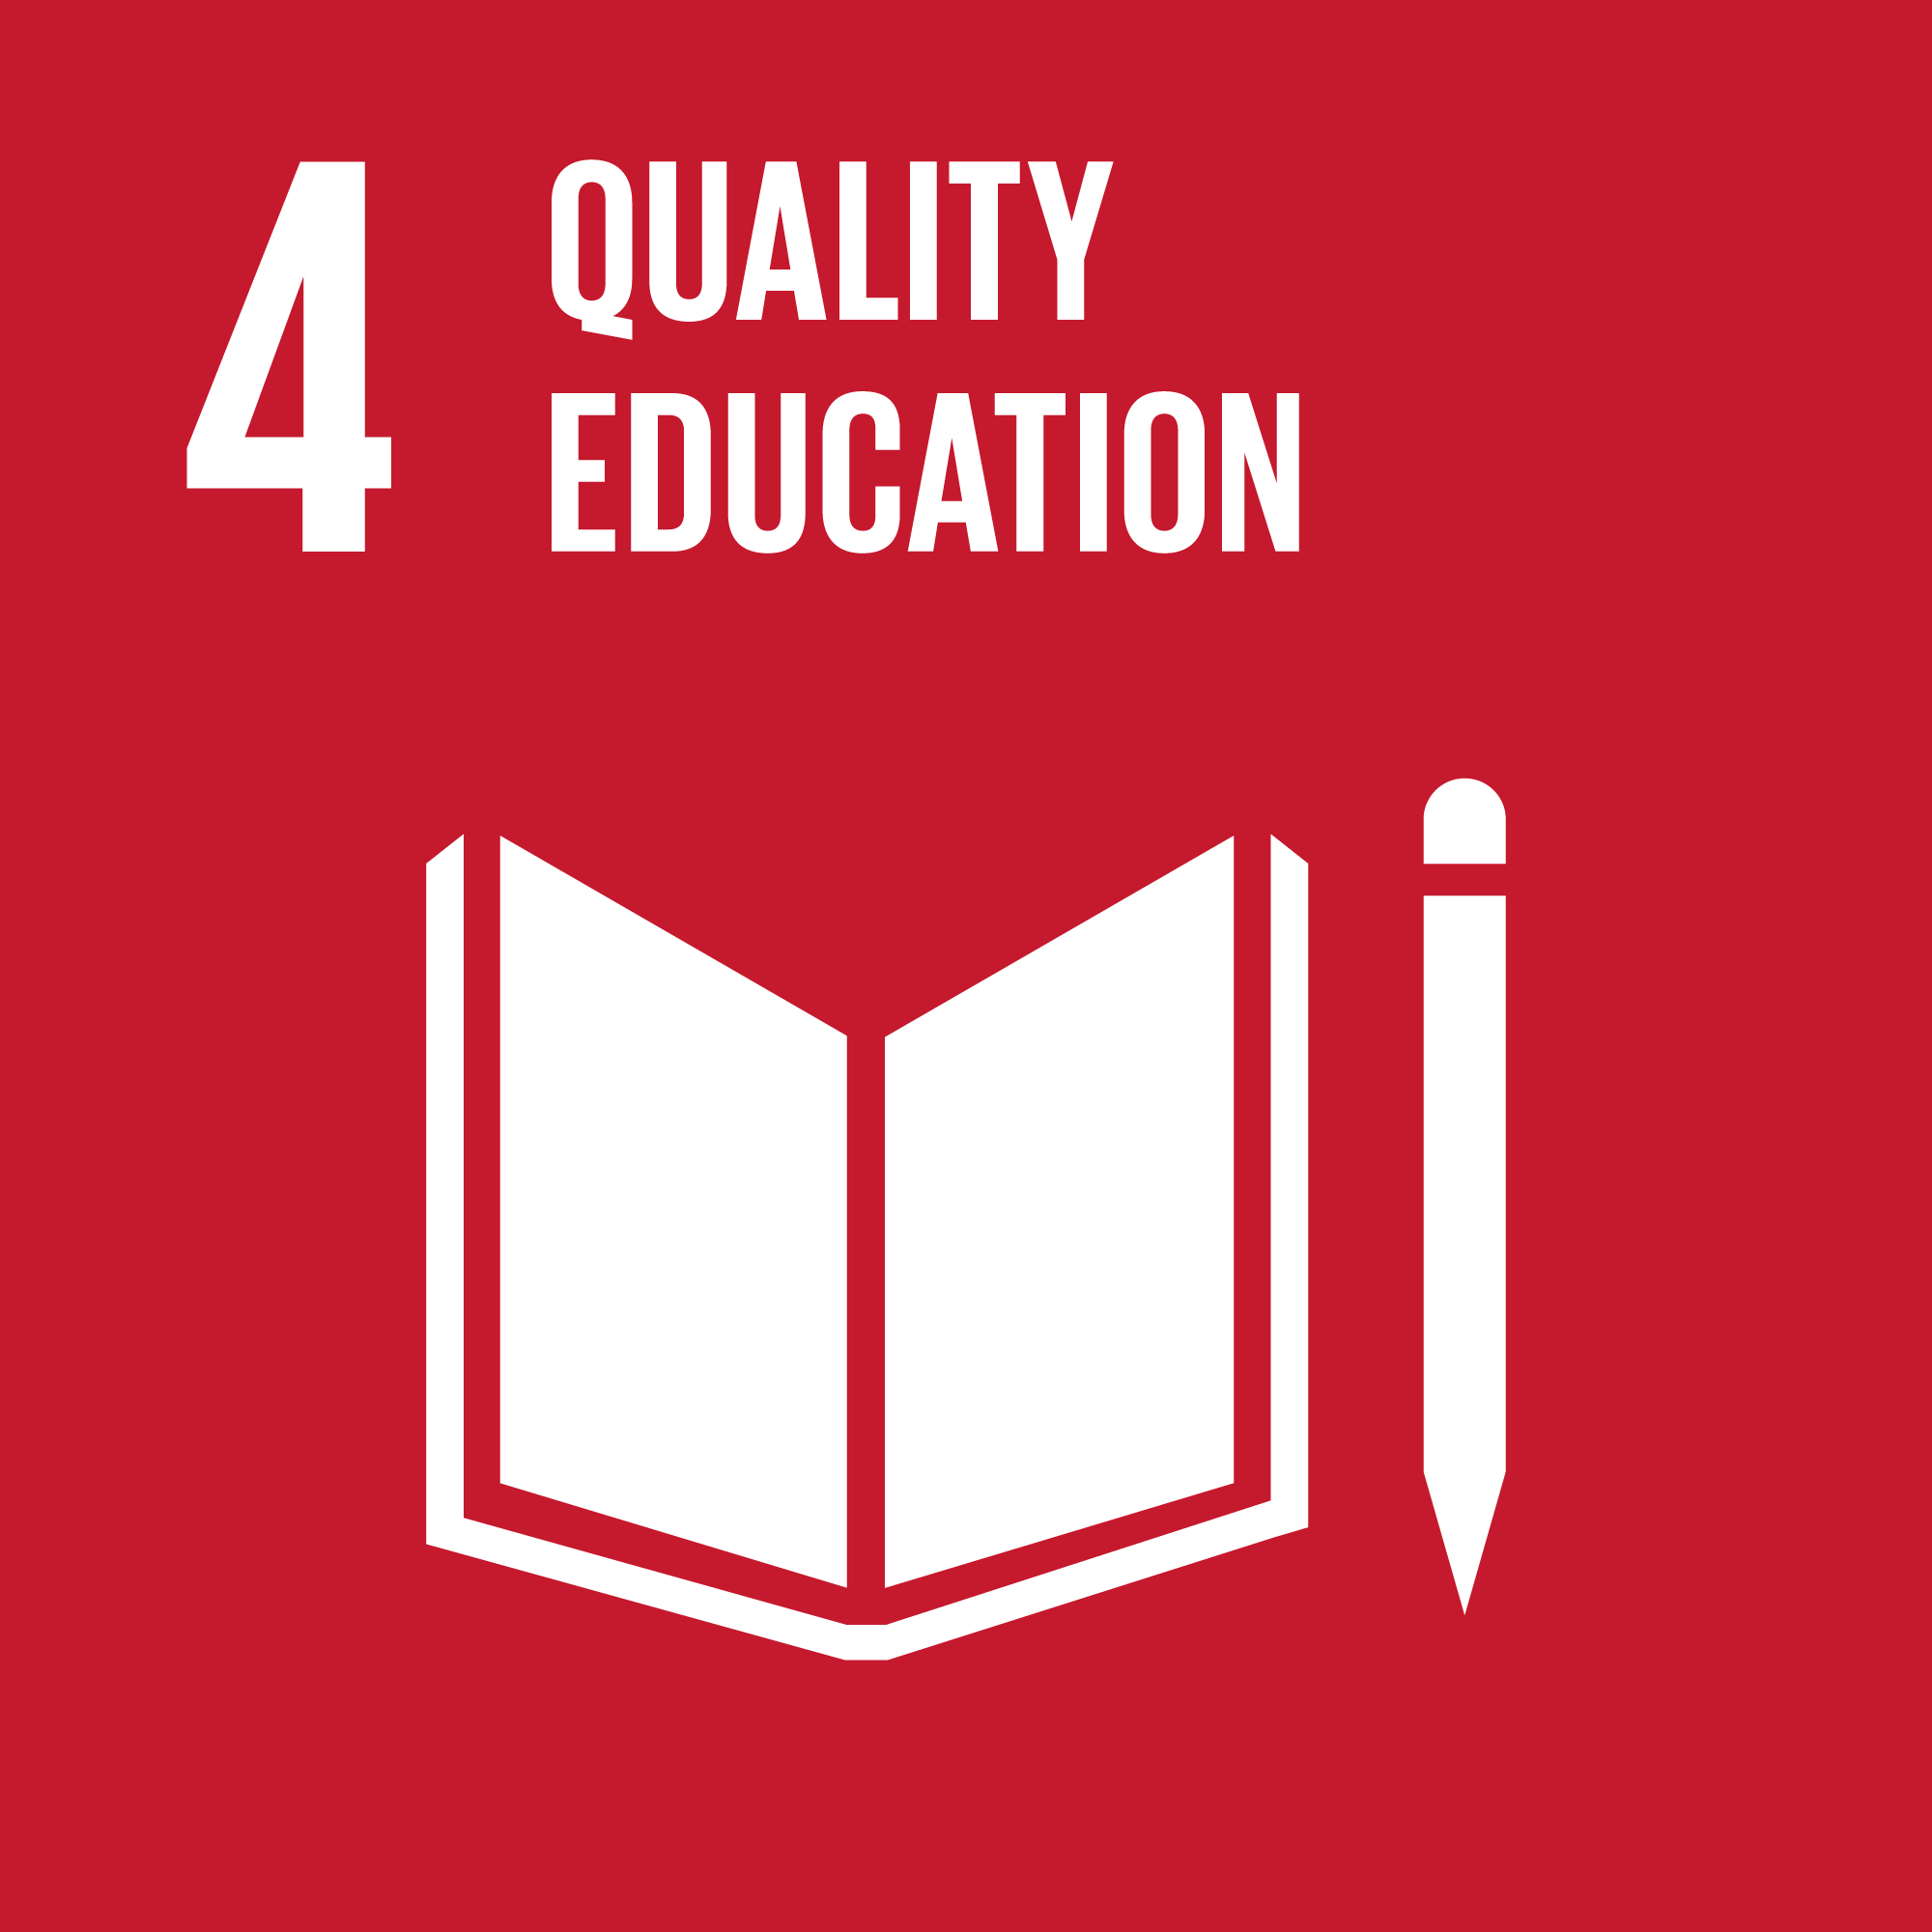 goal 4 quality education essay